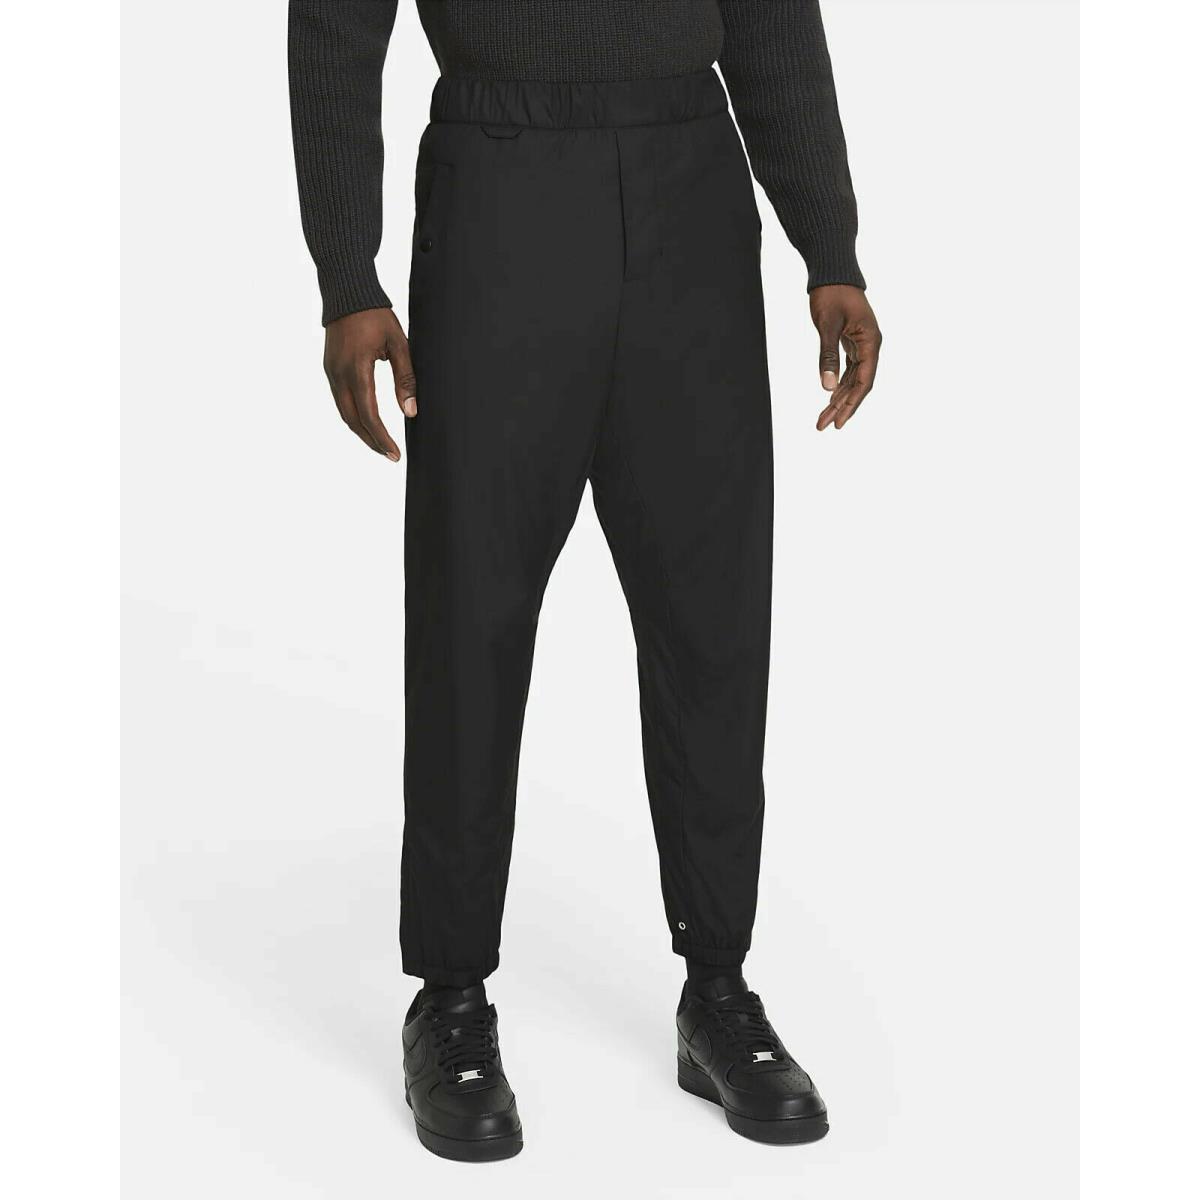 Nike Esc Every Stitch Considered Sweatpants Pants Men`s Multi Size DC1064-010